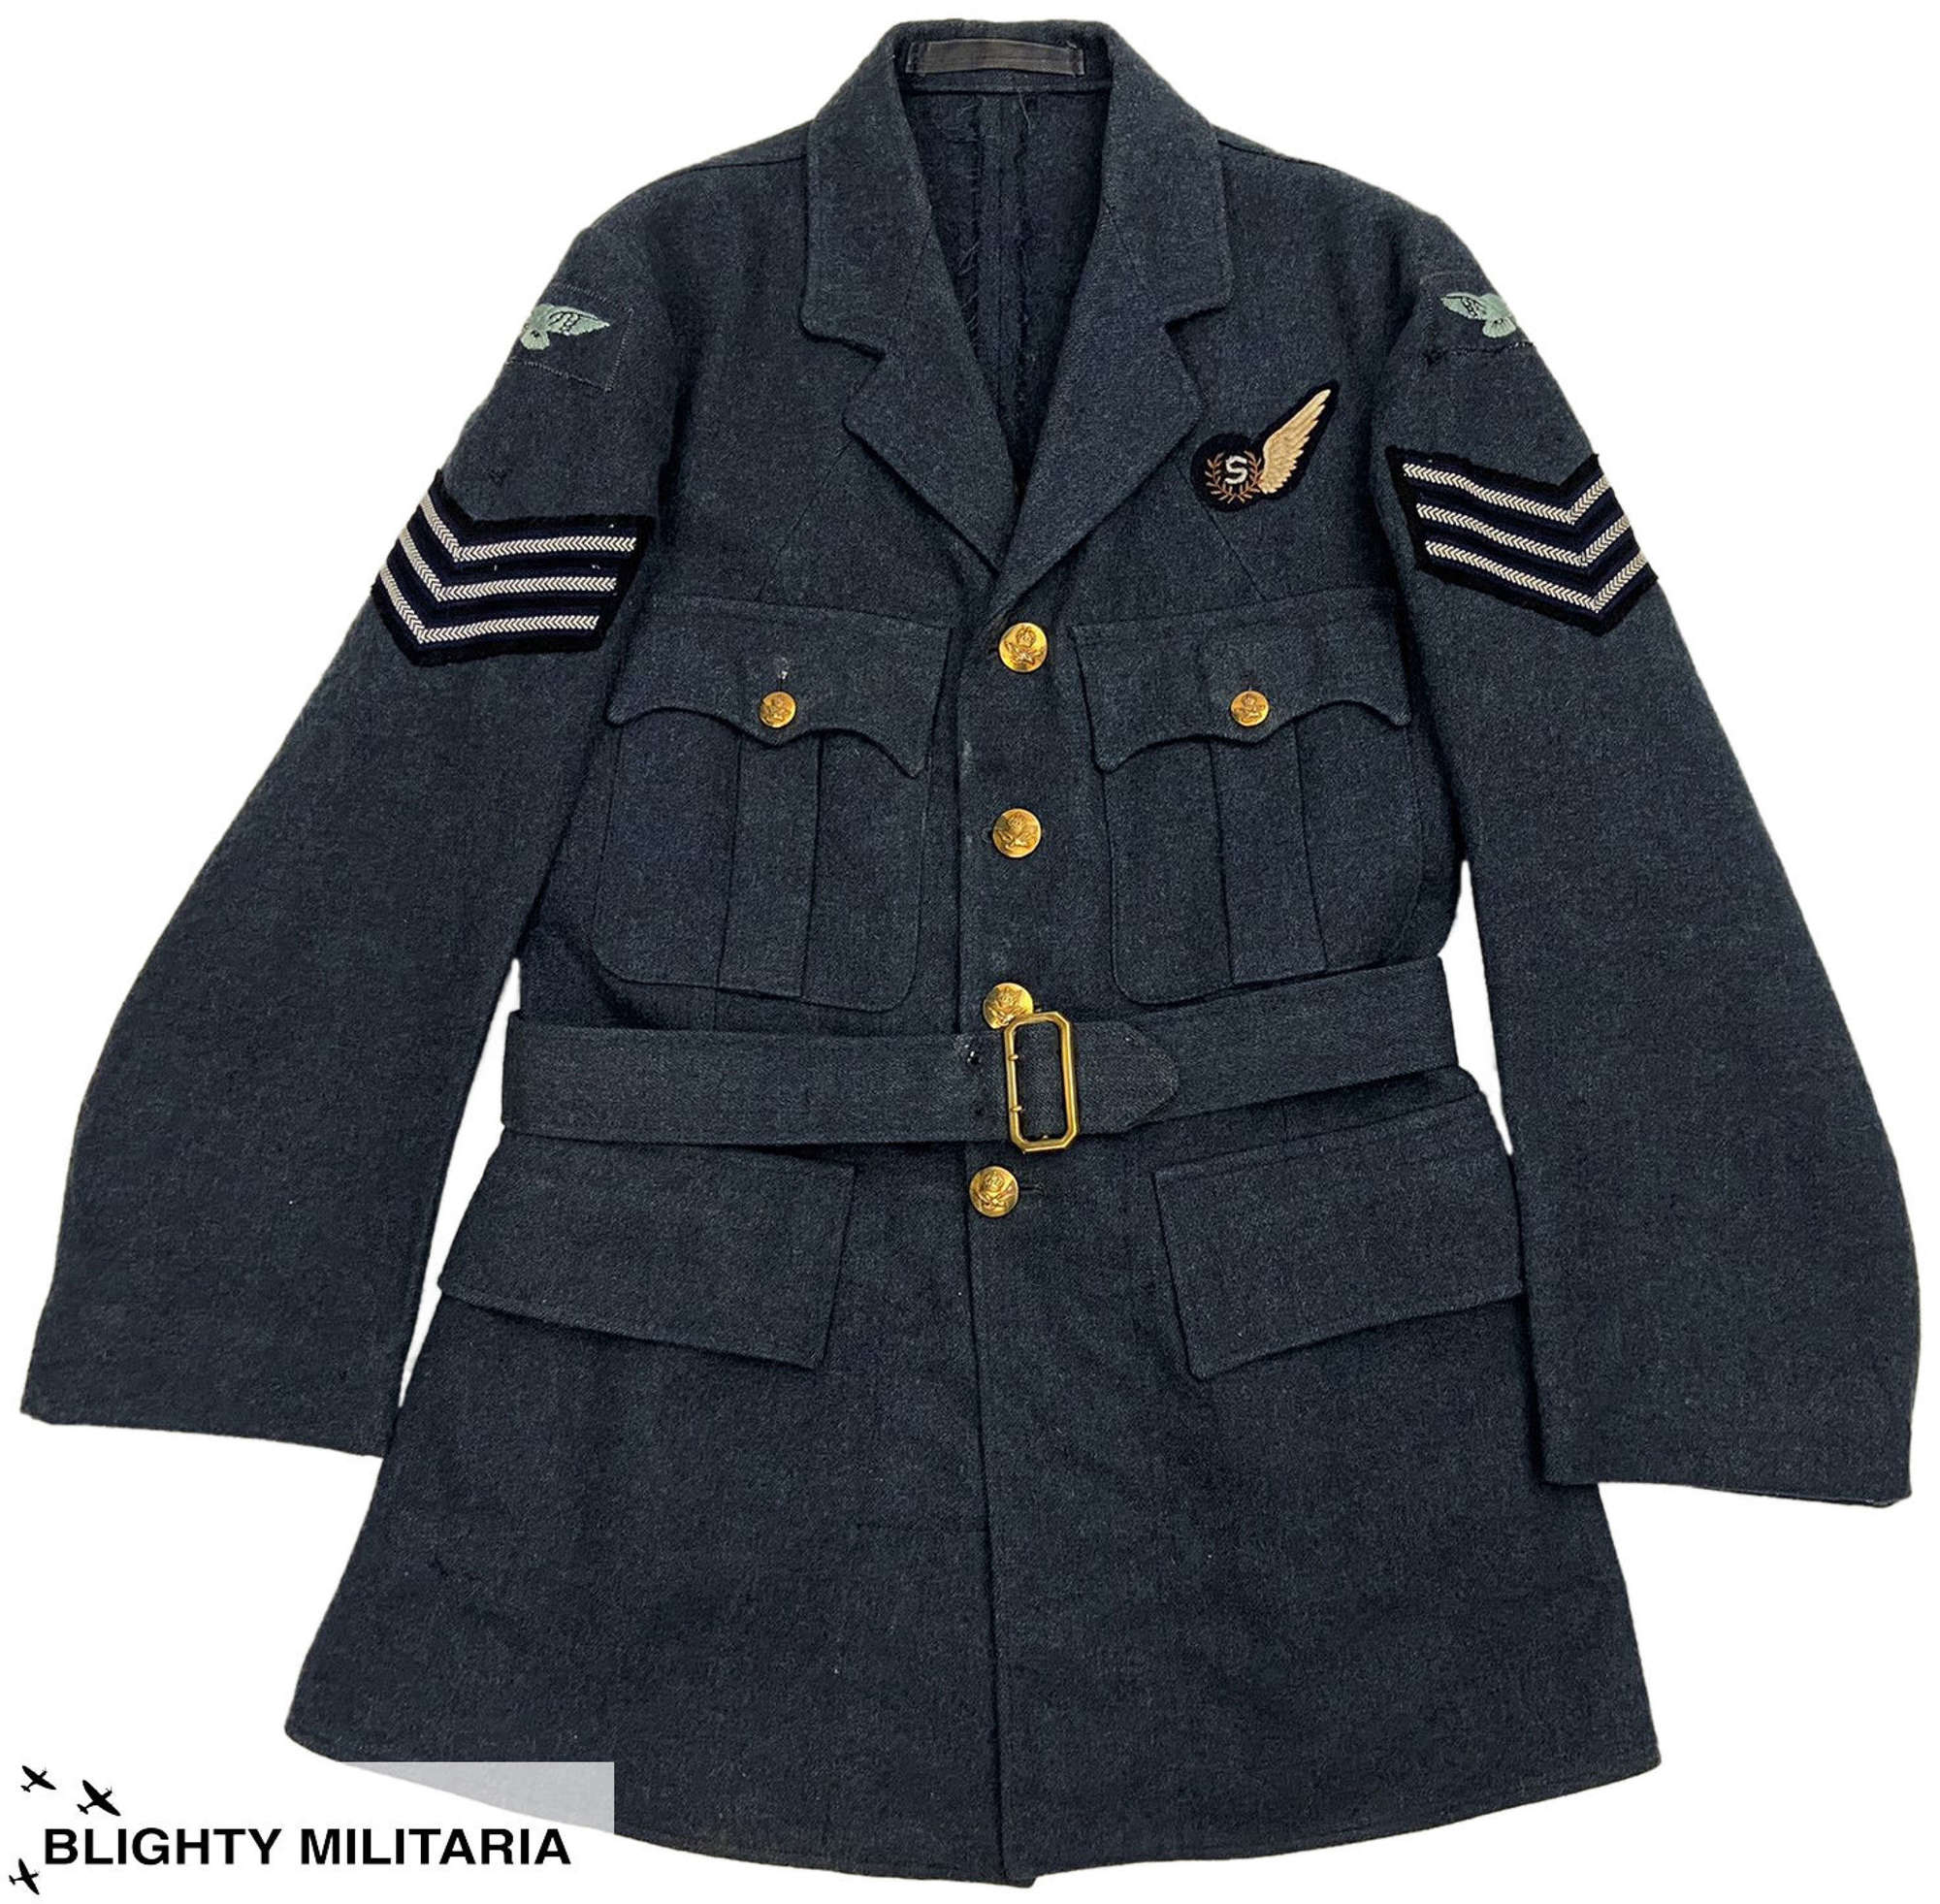 Original Early 1950s RAF Ordinary Airman's Tunic - Size 11